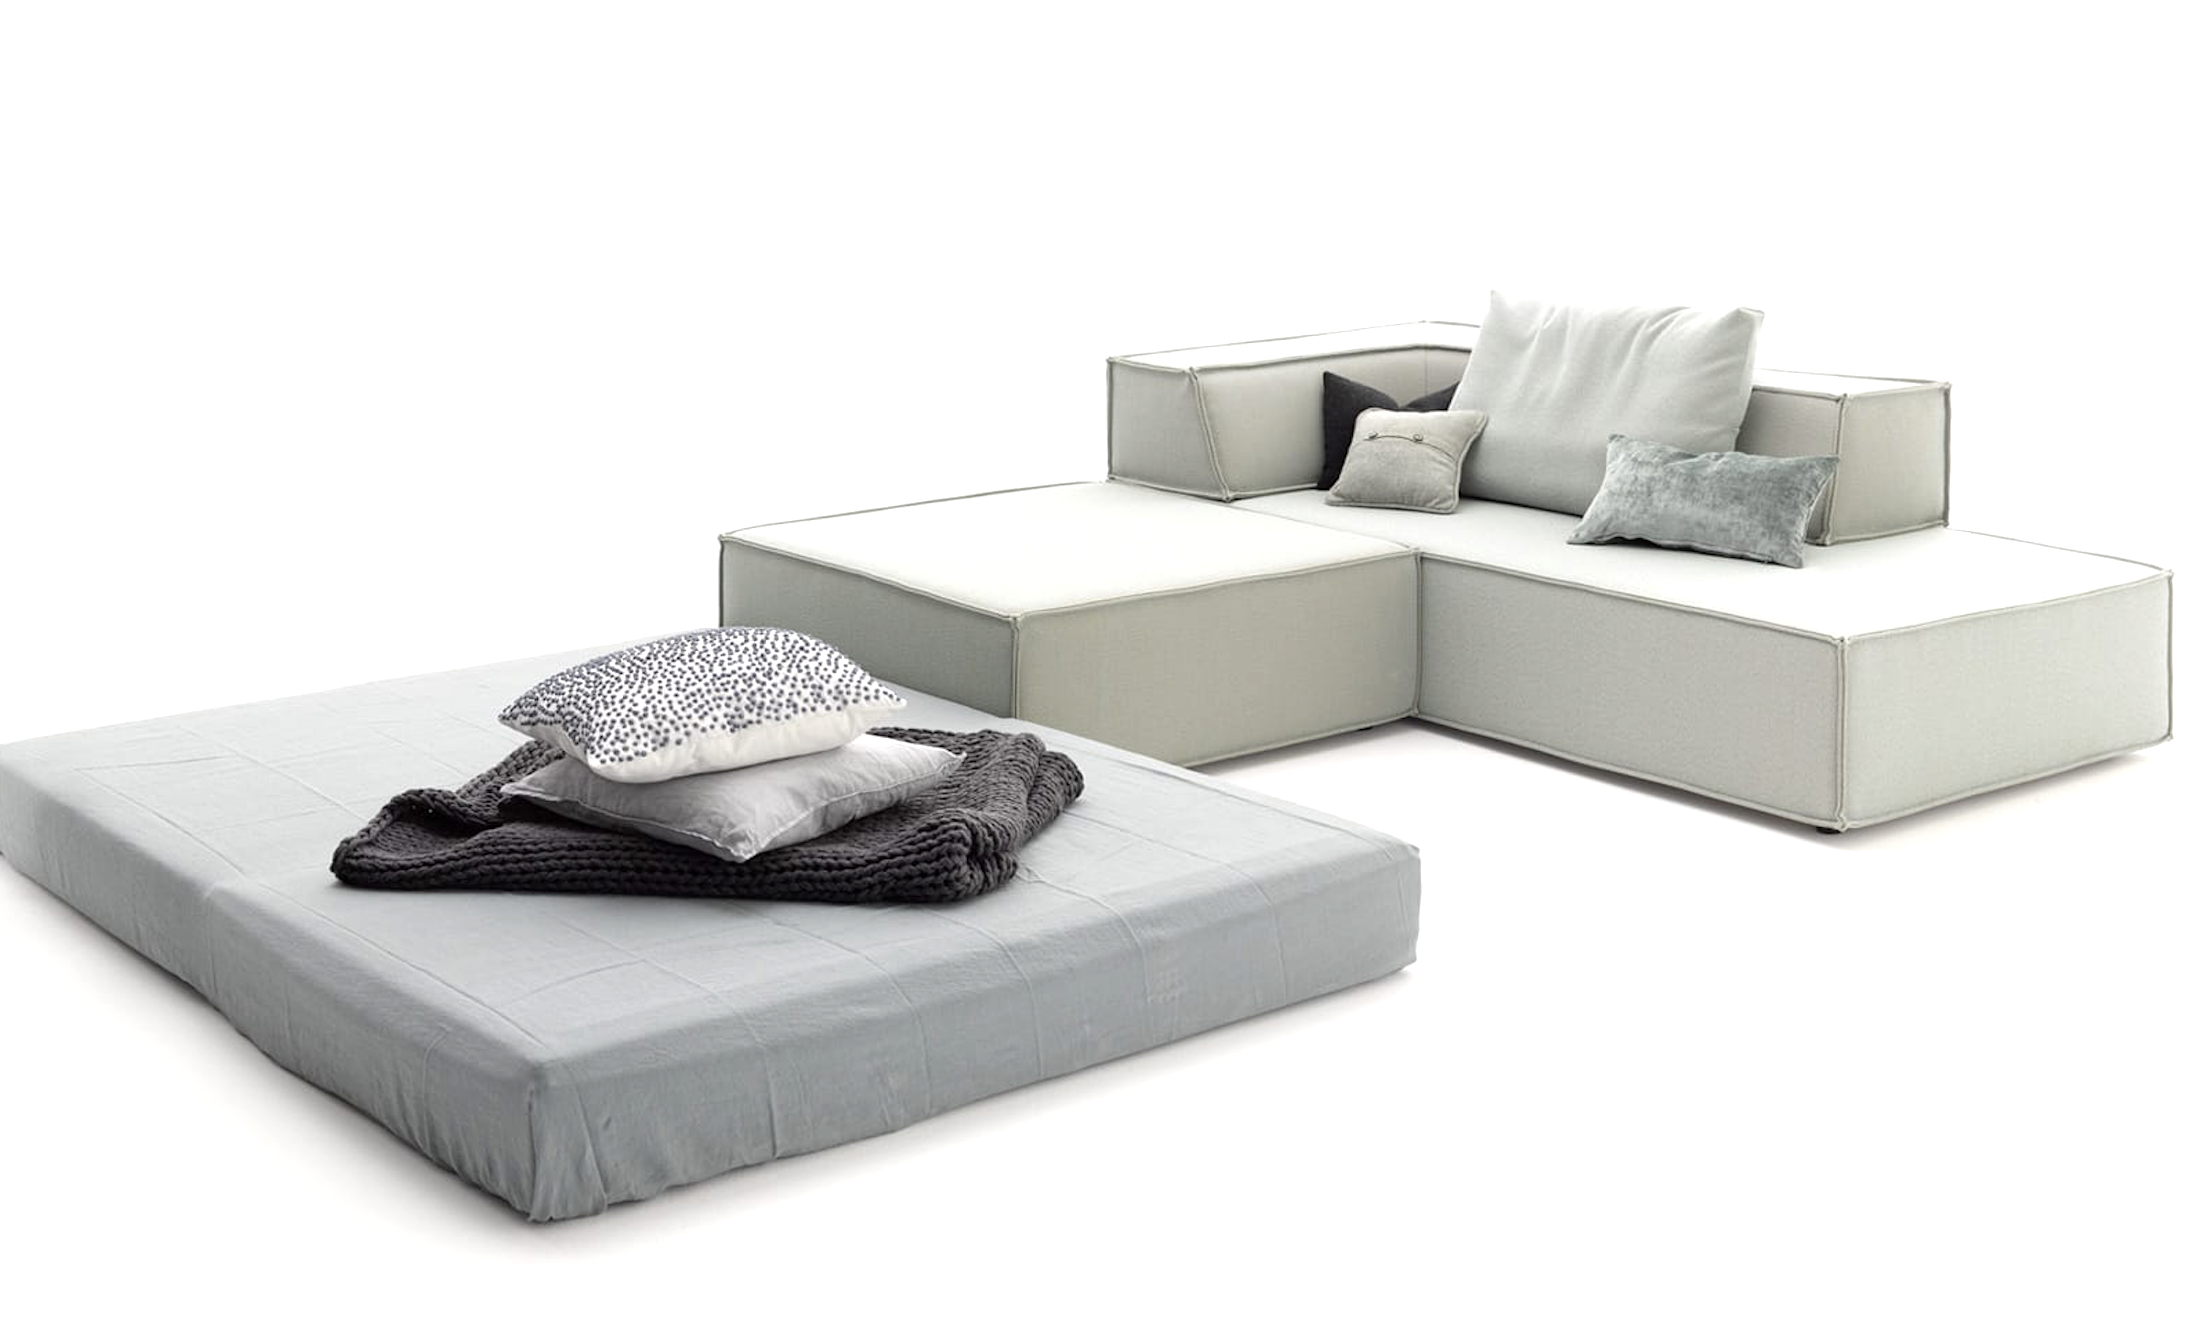 Product Image Trio sleeper sofa